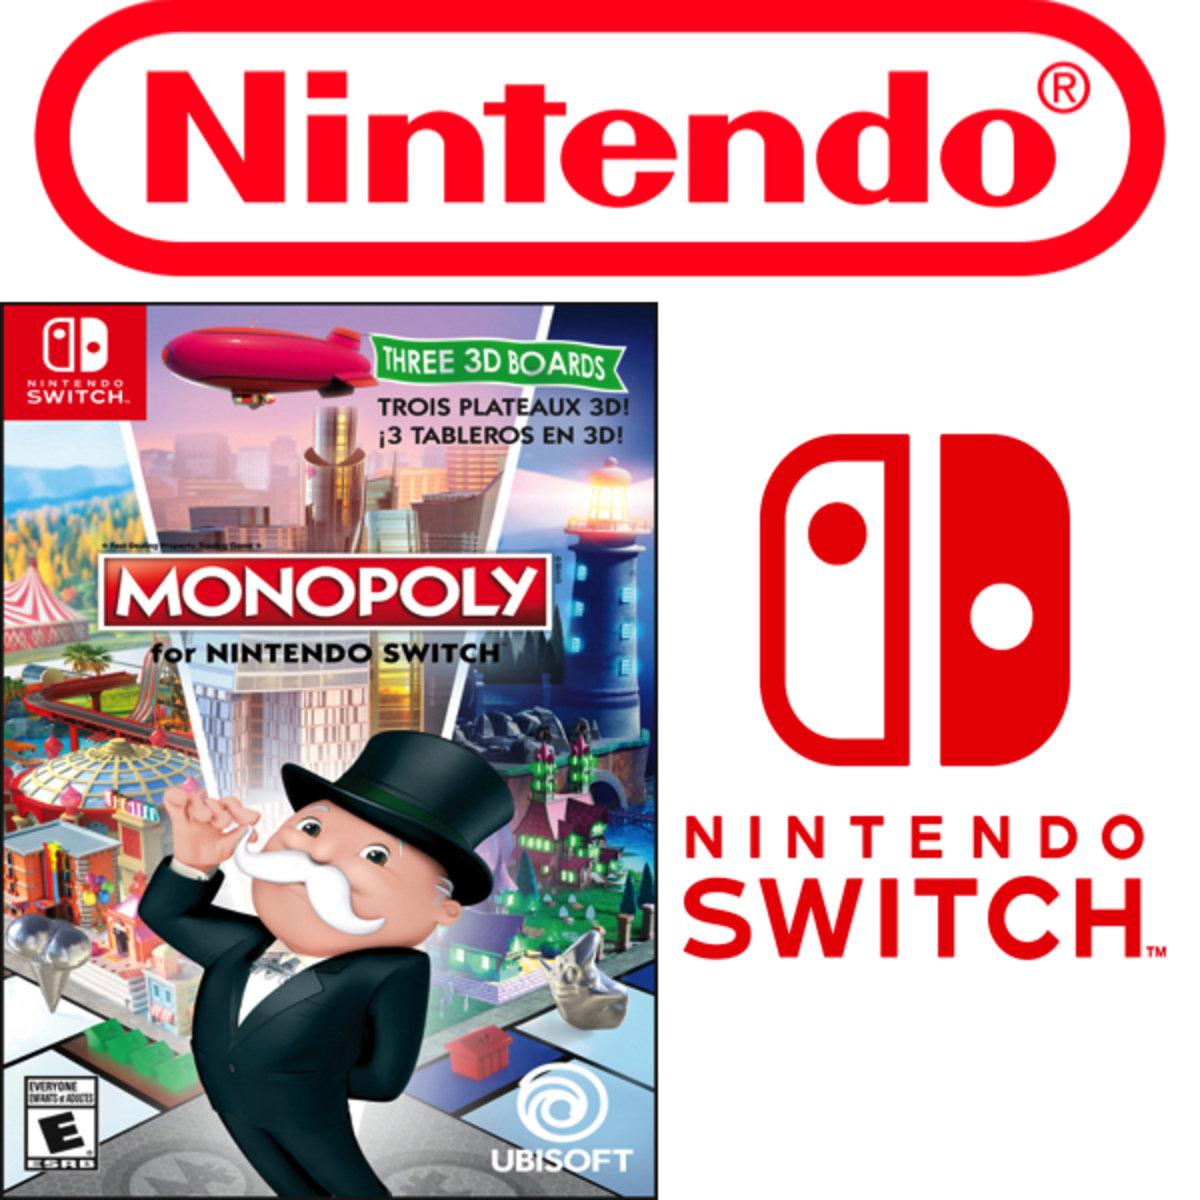 monopoly nintendo switch eshop